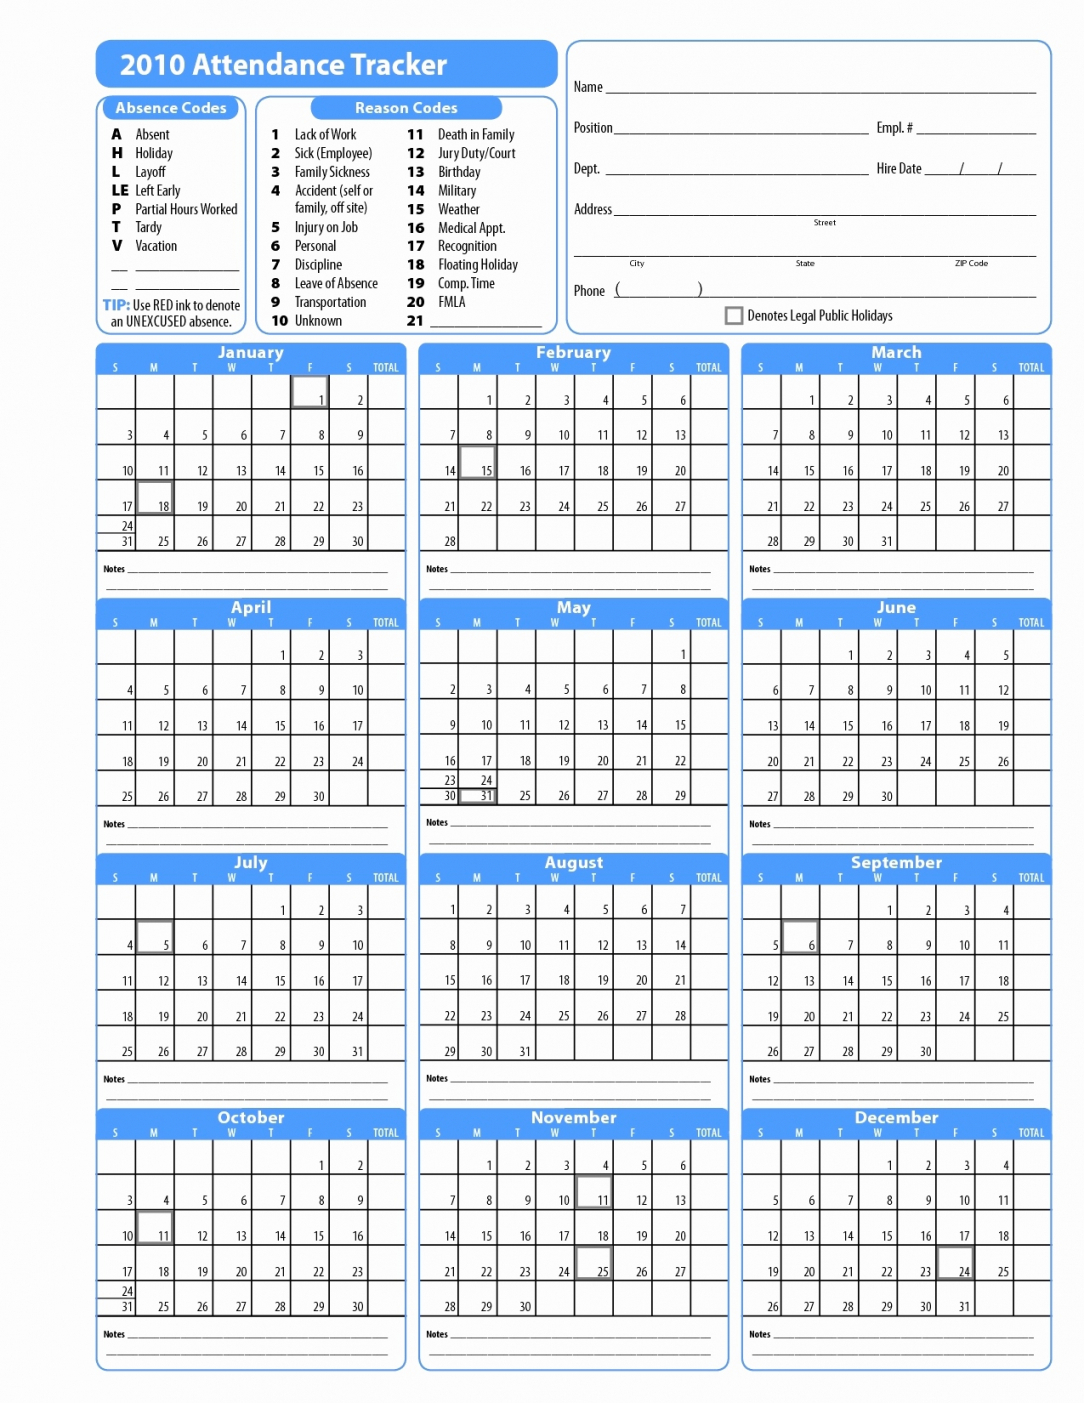 Fmla Leave Tracking Spreadsheet Regarding Fmla Rolling Calendar Tracking Spreadsheet Review Of Intermittent